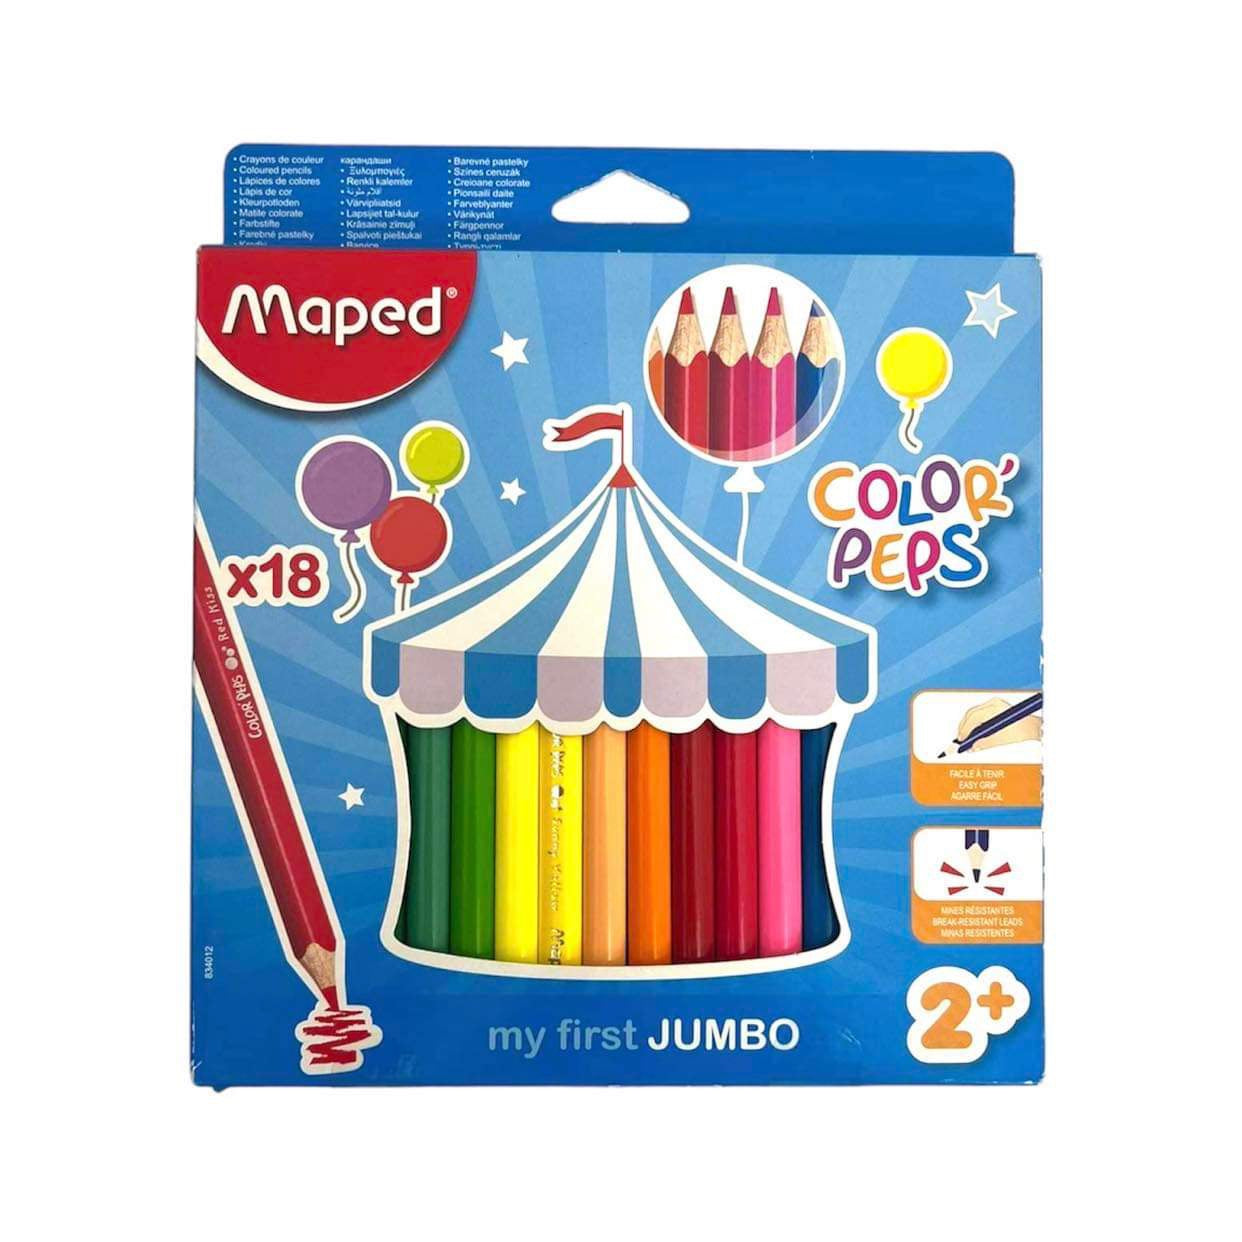 Maped Jumbo Colored Pencils 18 Colors || الوان خشبية مابد جامبو ١٨ لون 